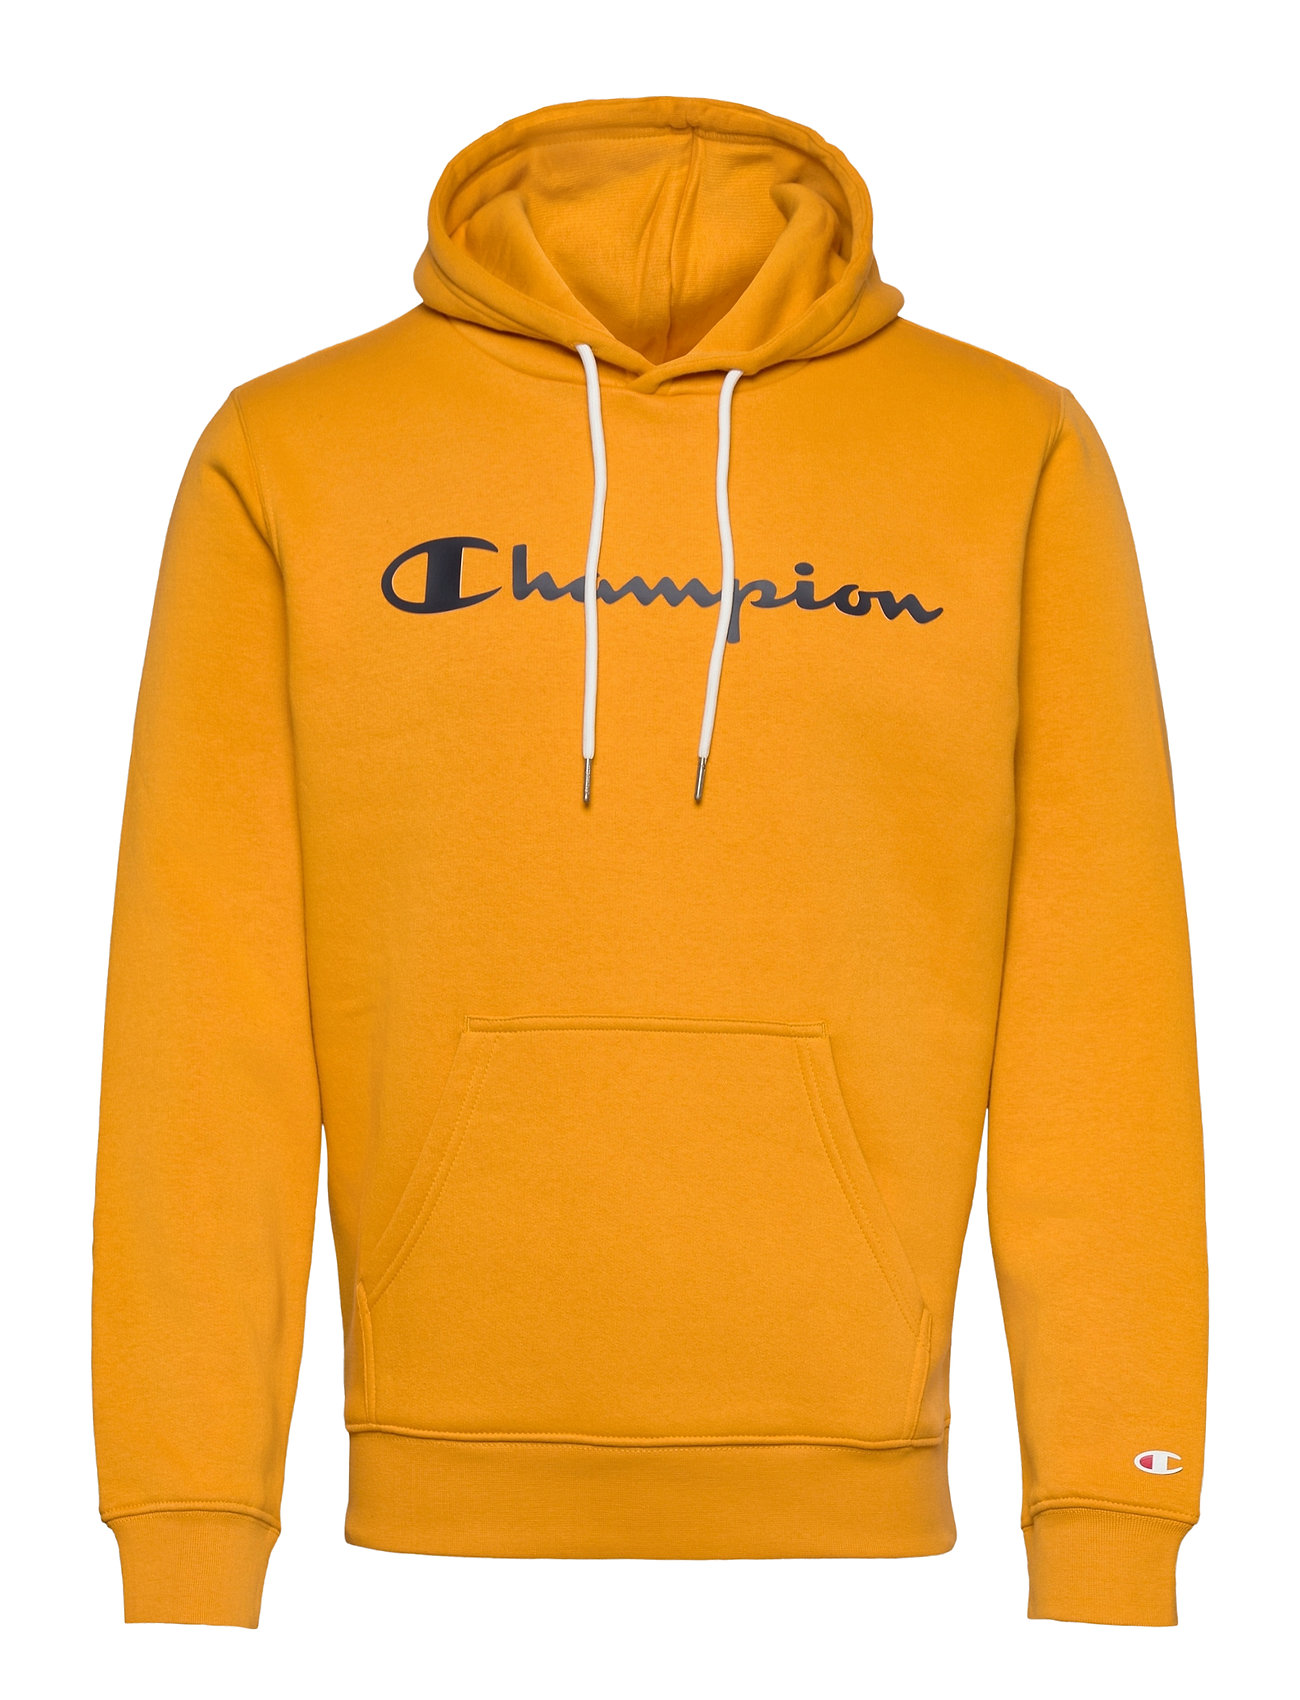 utilgivelig rulle Maestro Champion hoodies – Hooded Sweatshirt Hoodie Trøje Gul Champion til herre i  Autumn Blaze - Pashion.dk